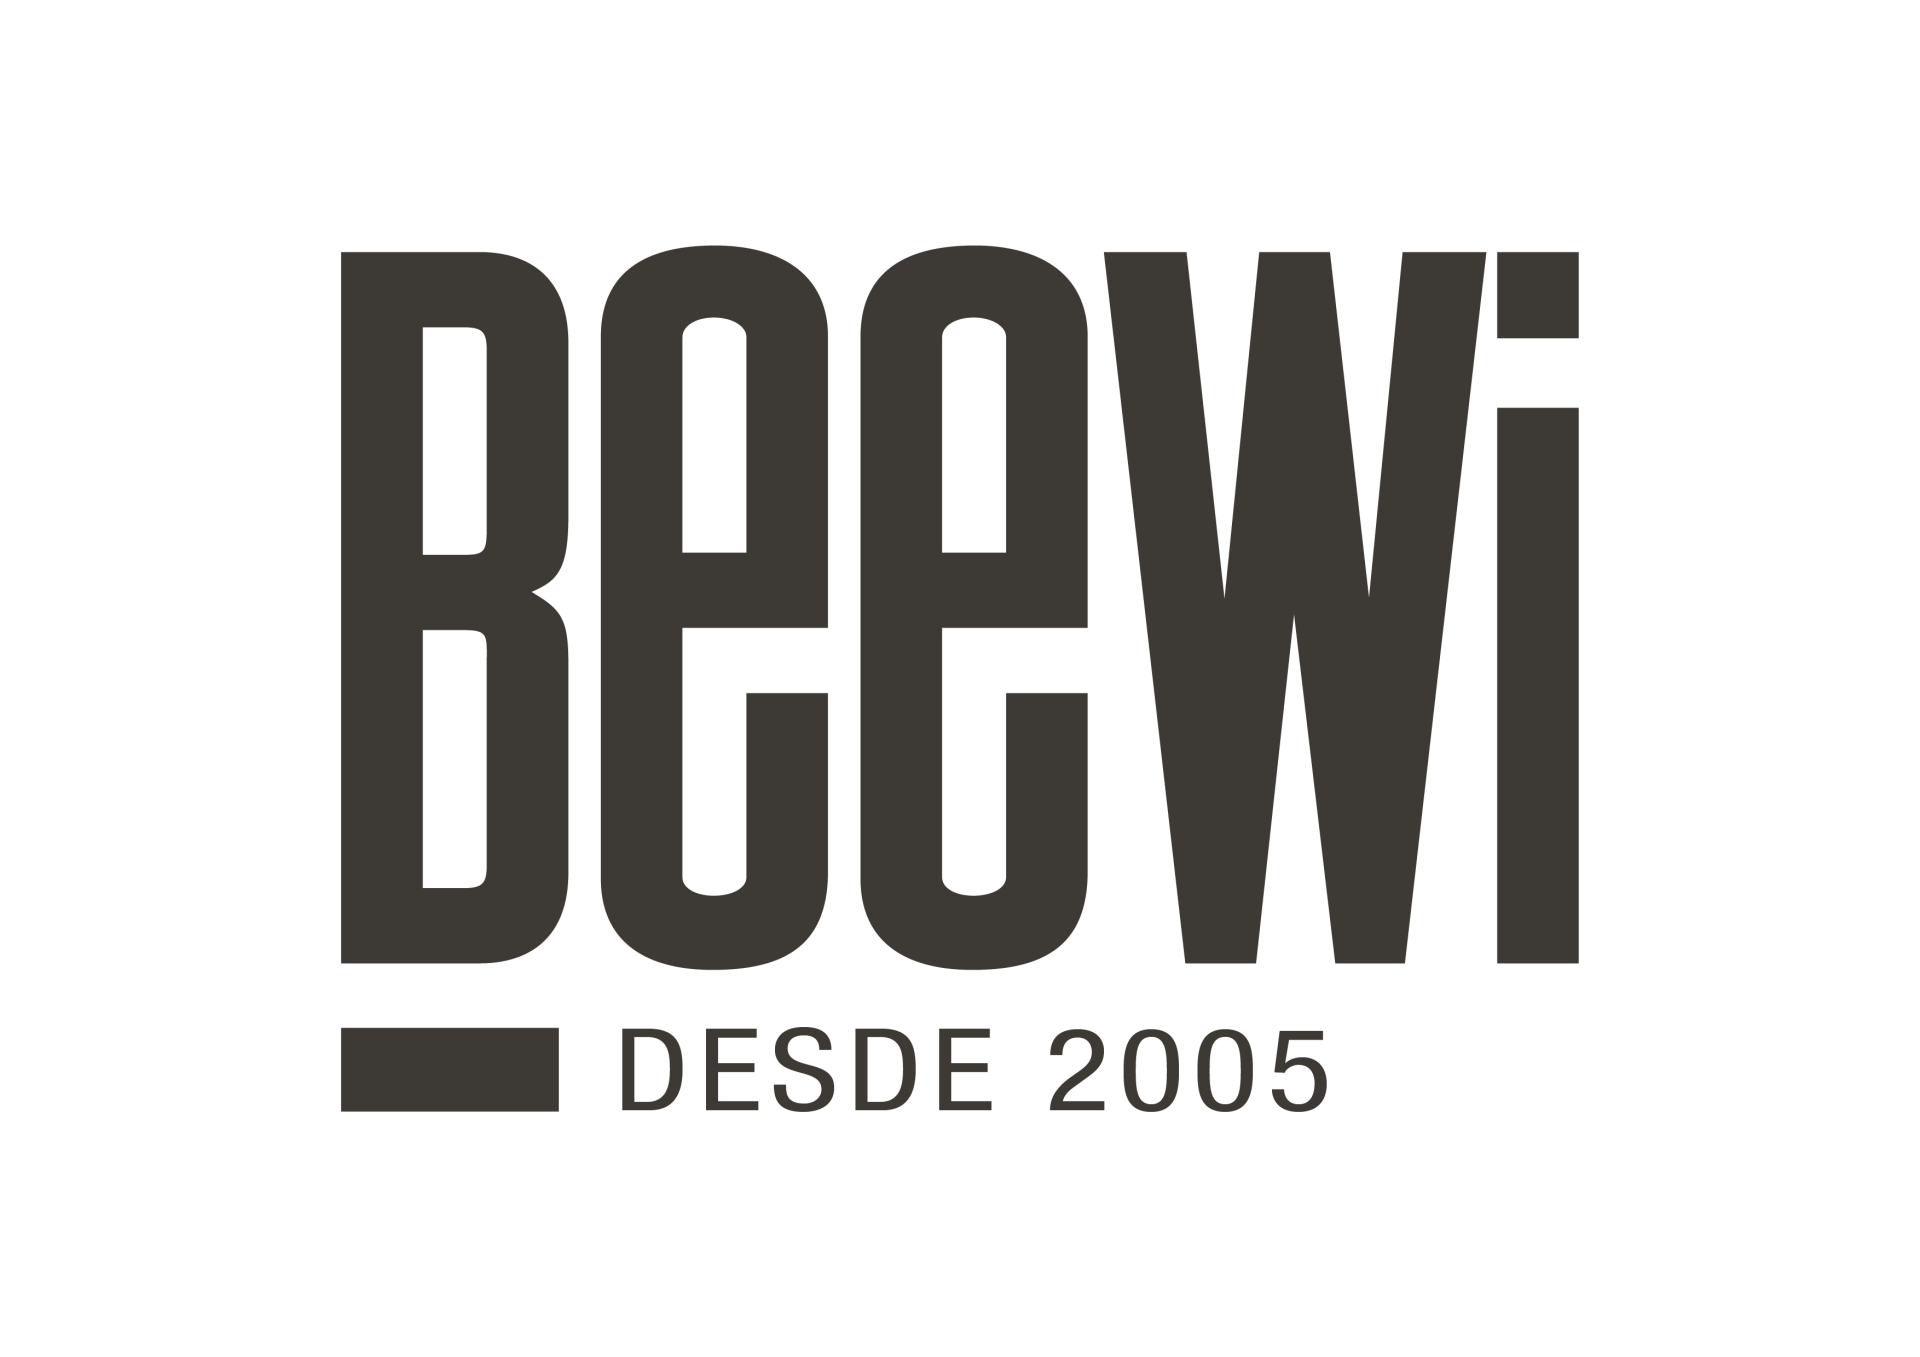 (c) Beewi.com